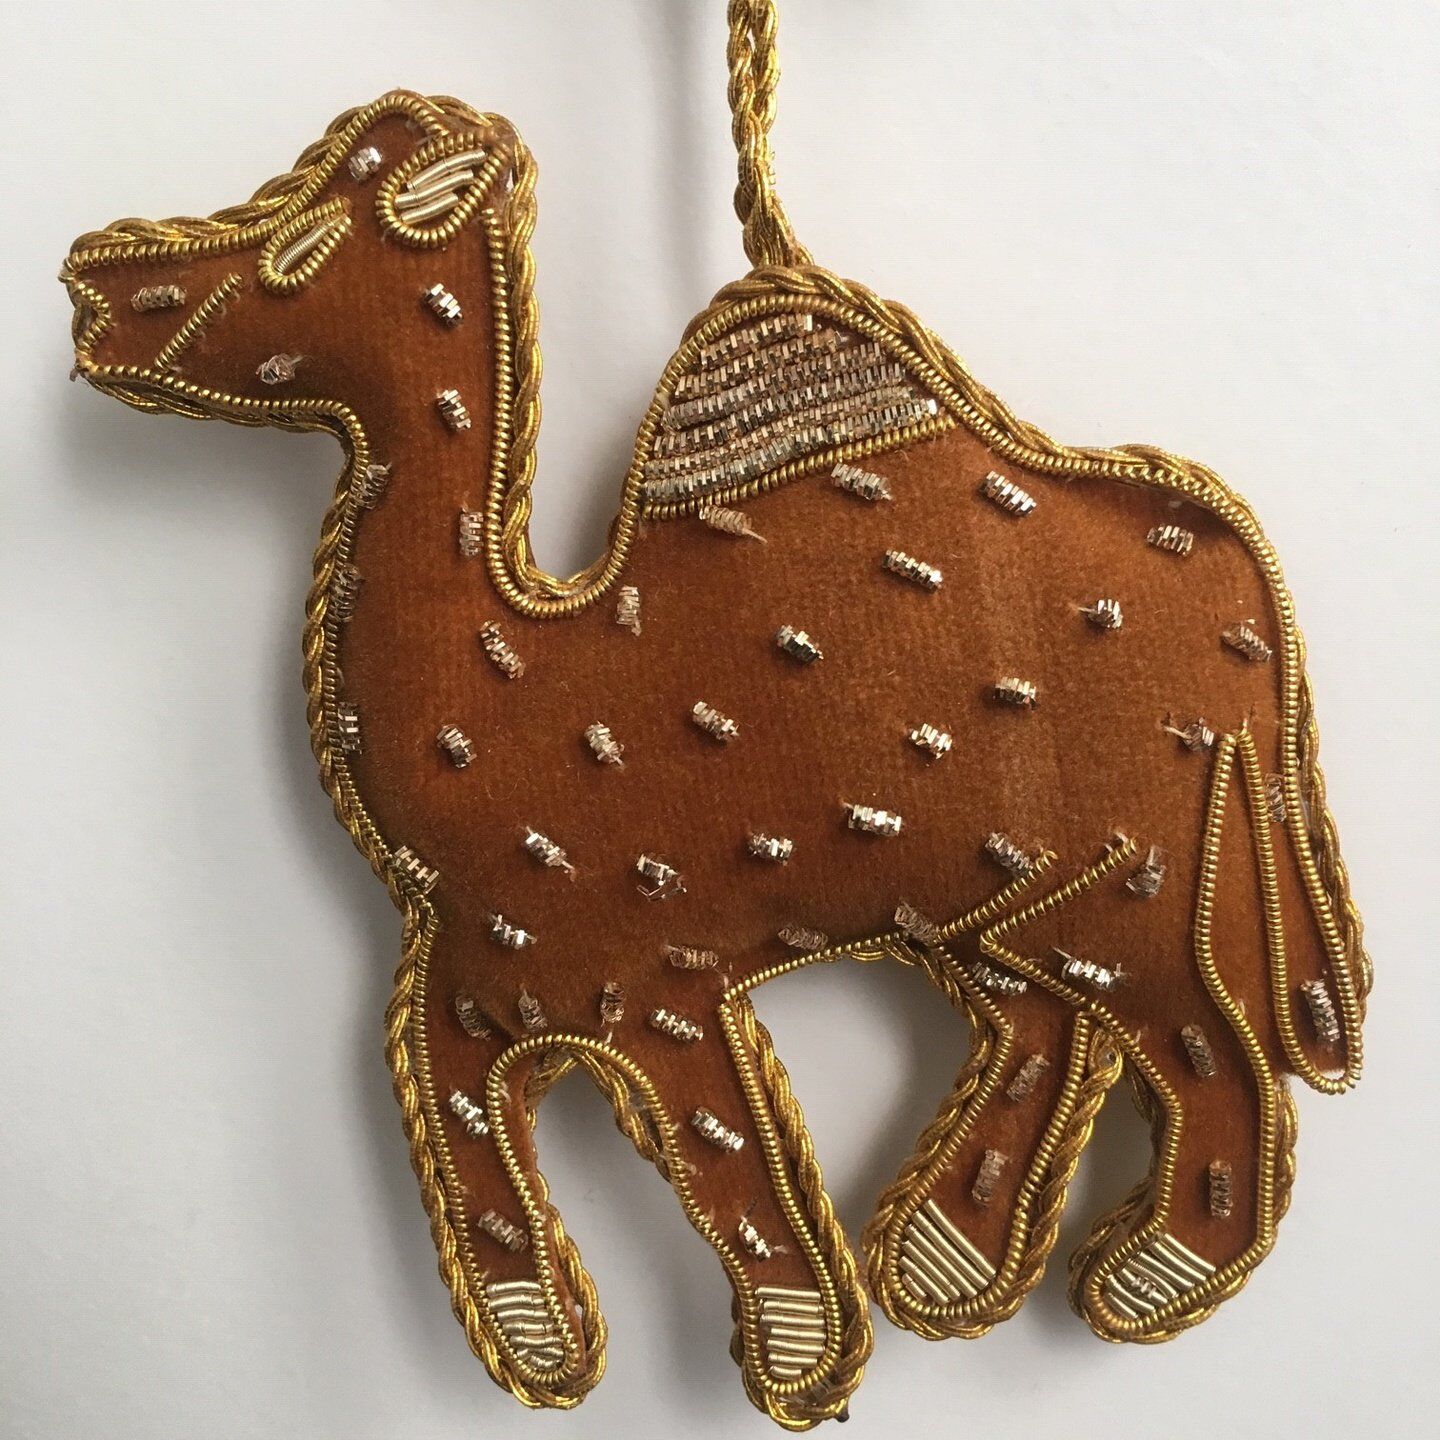 Decoration: Brown camel